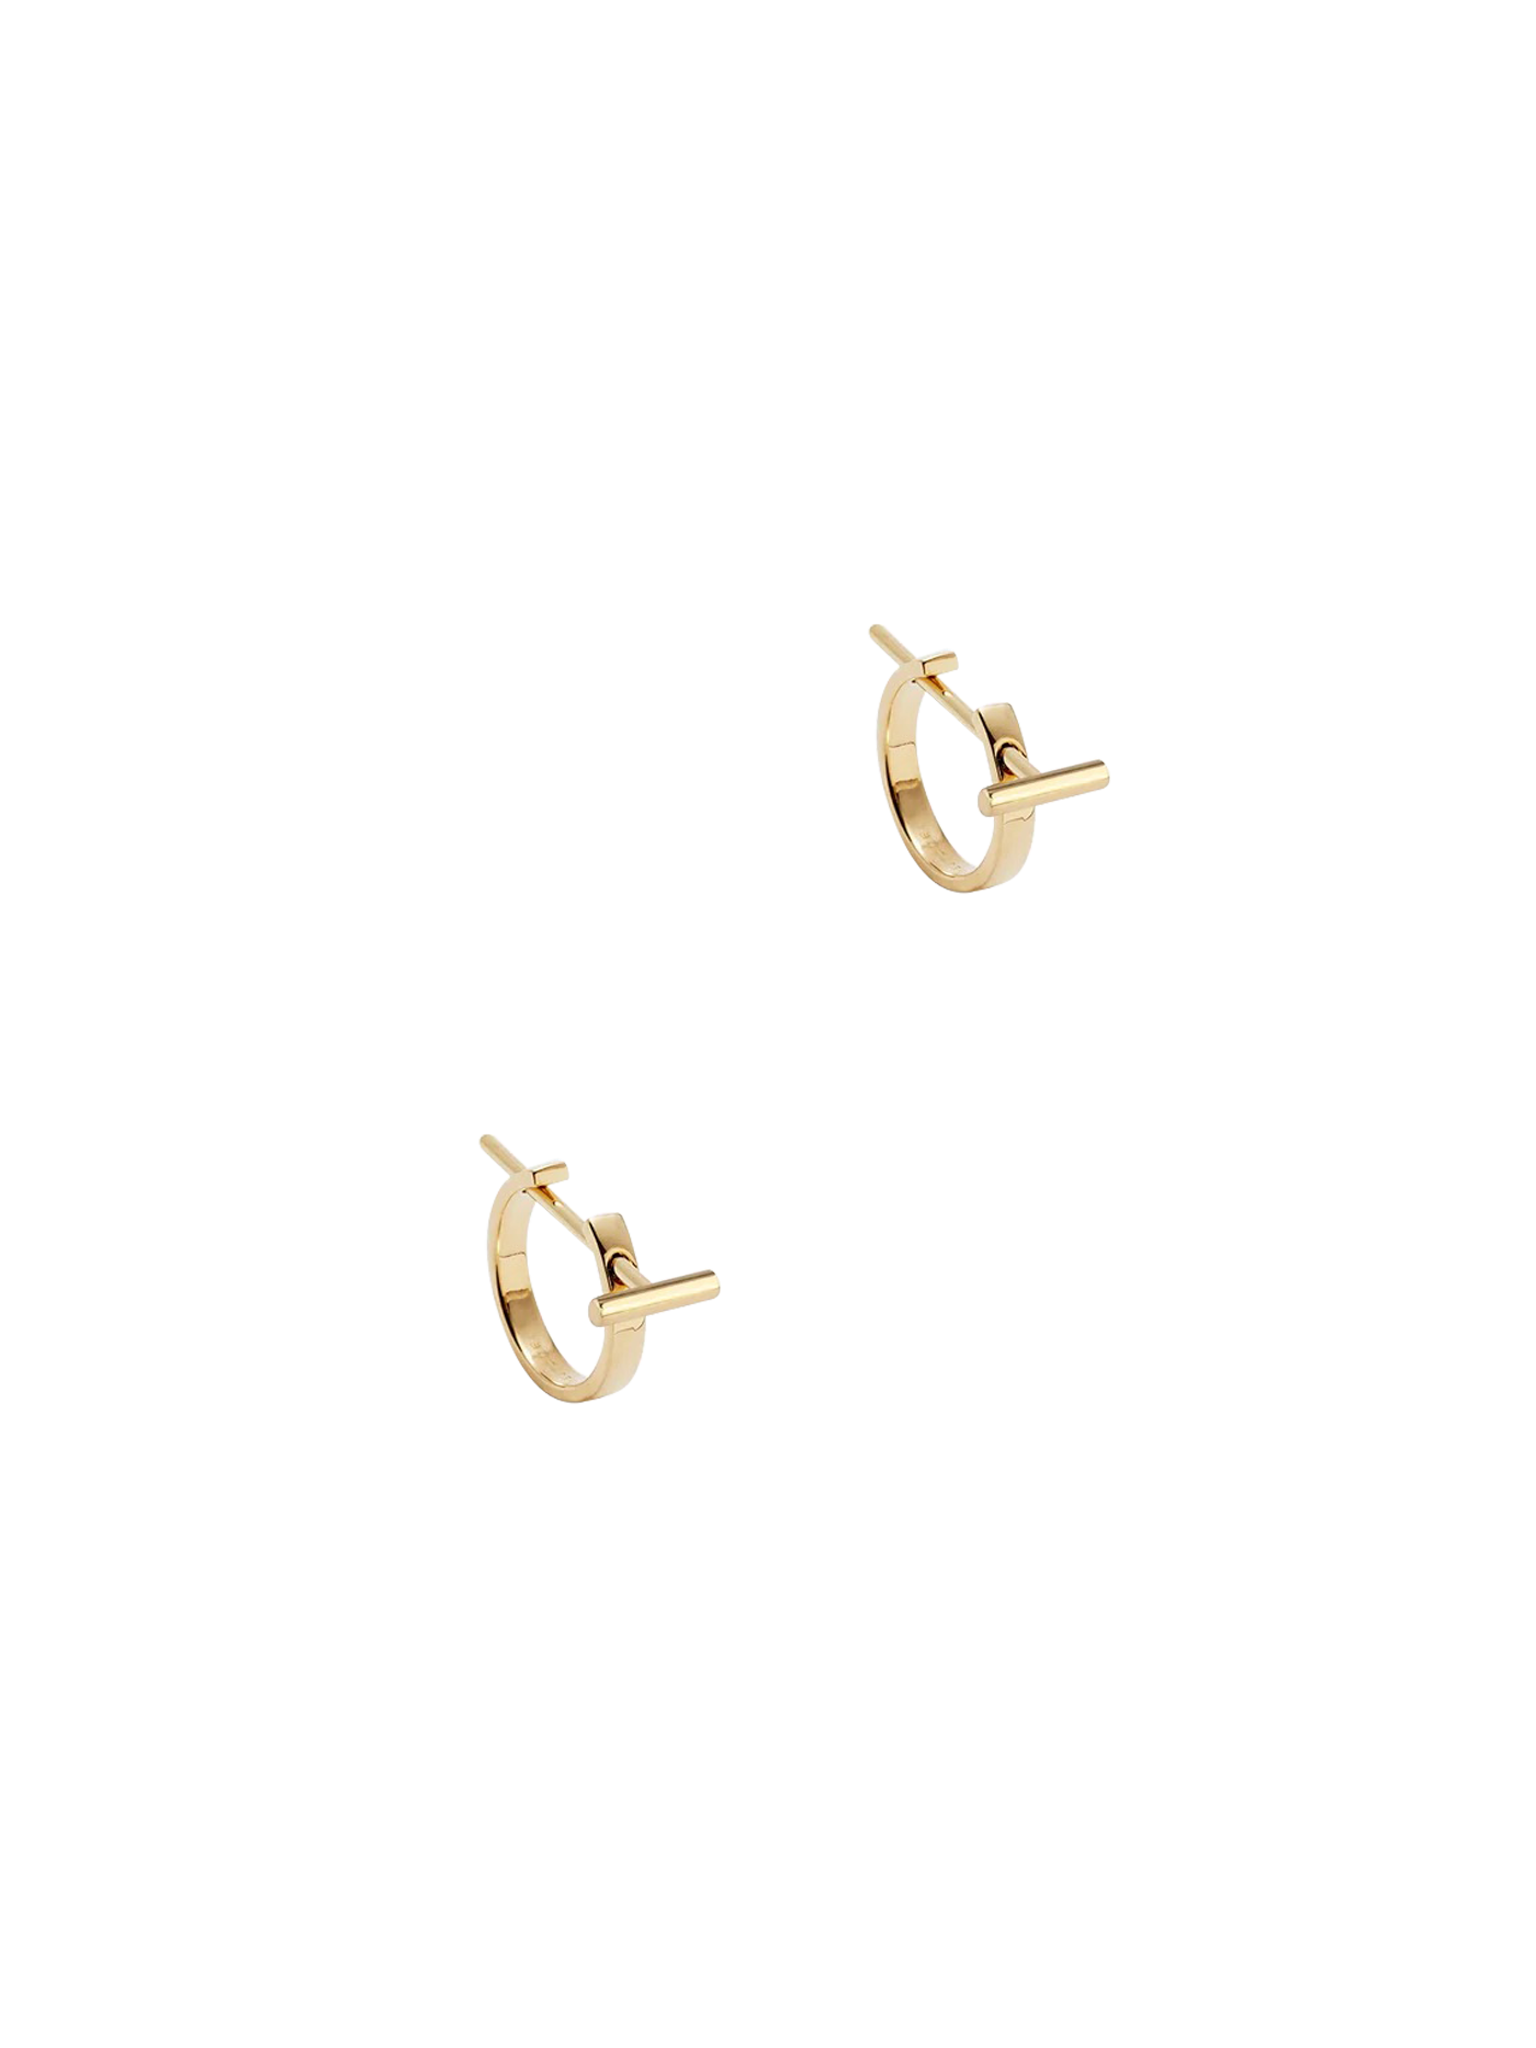 Chikka medium earrings with barre pins